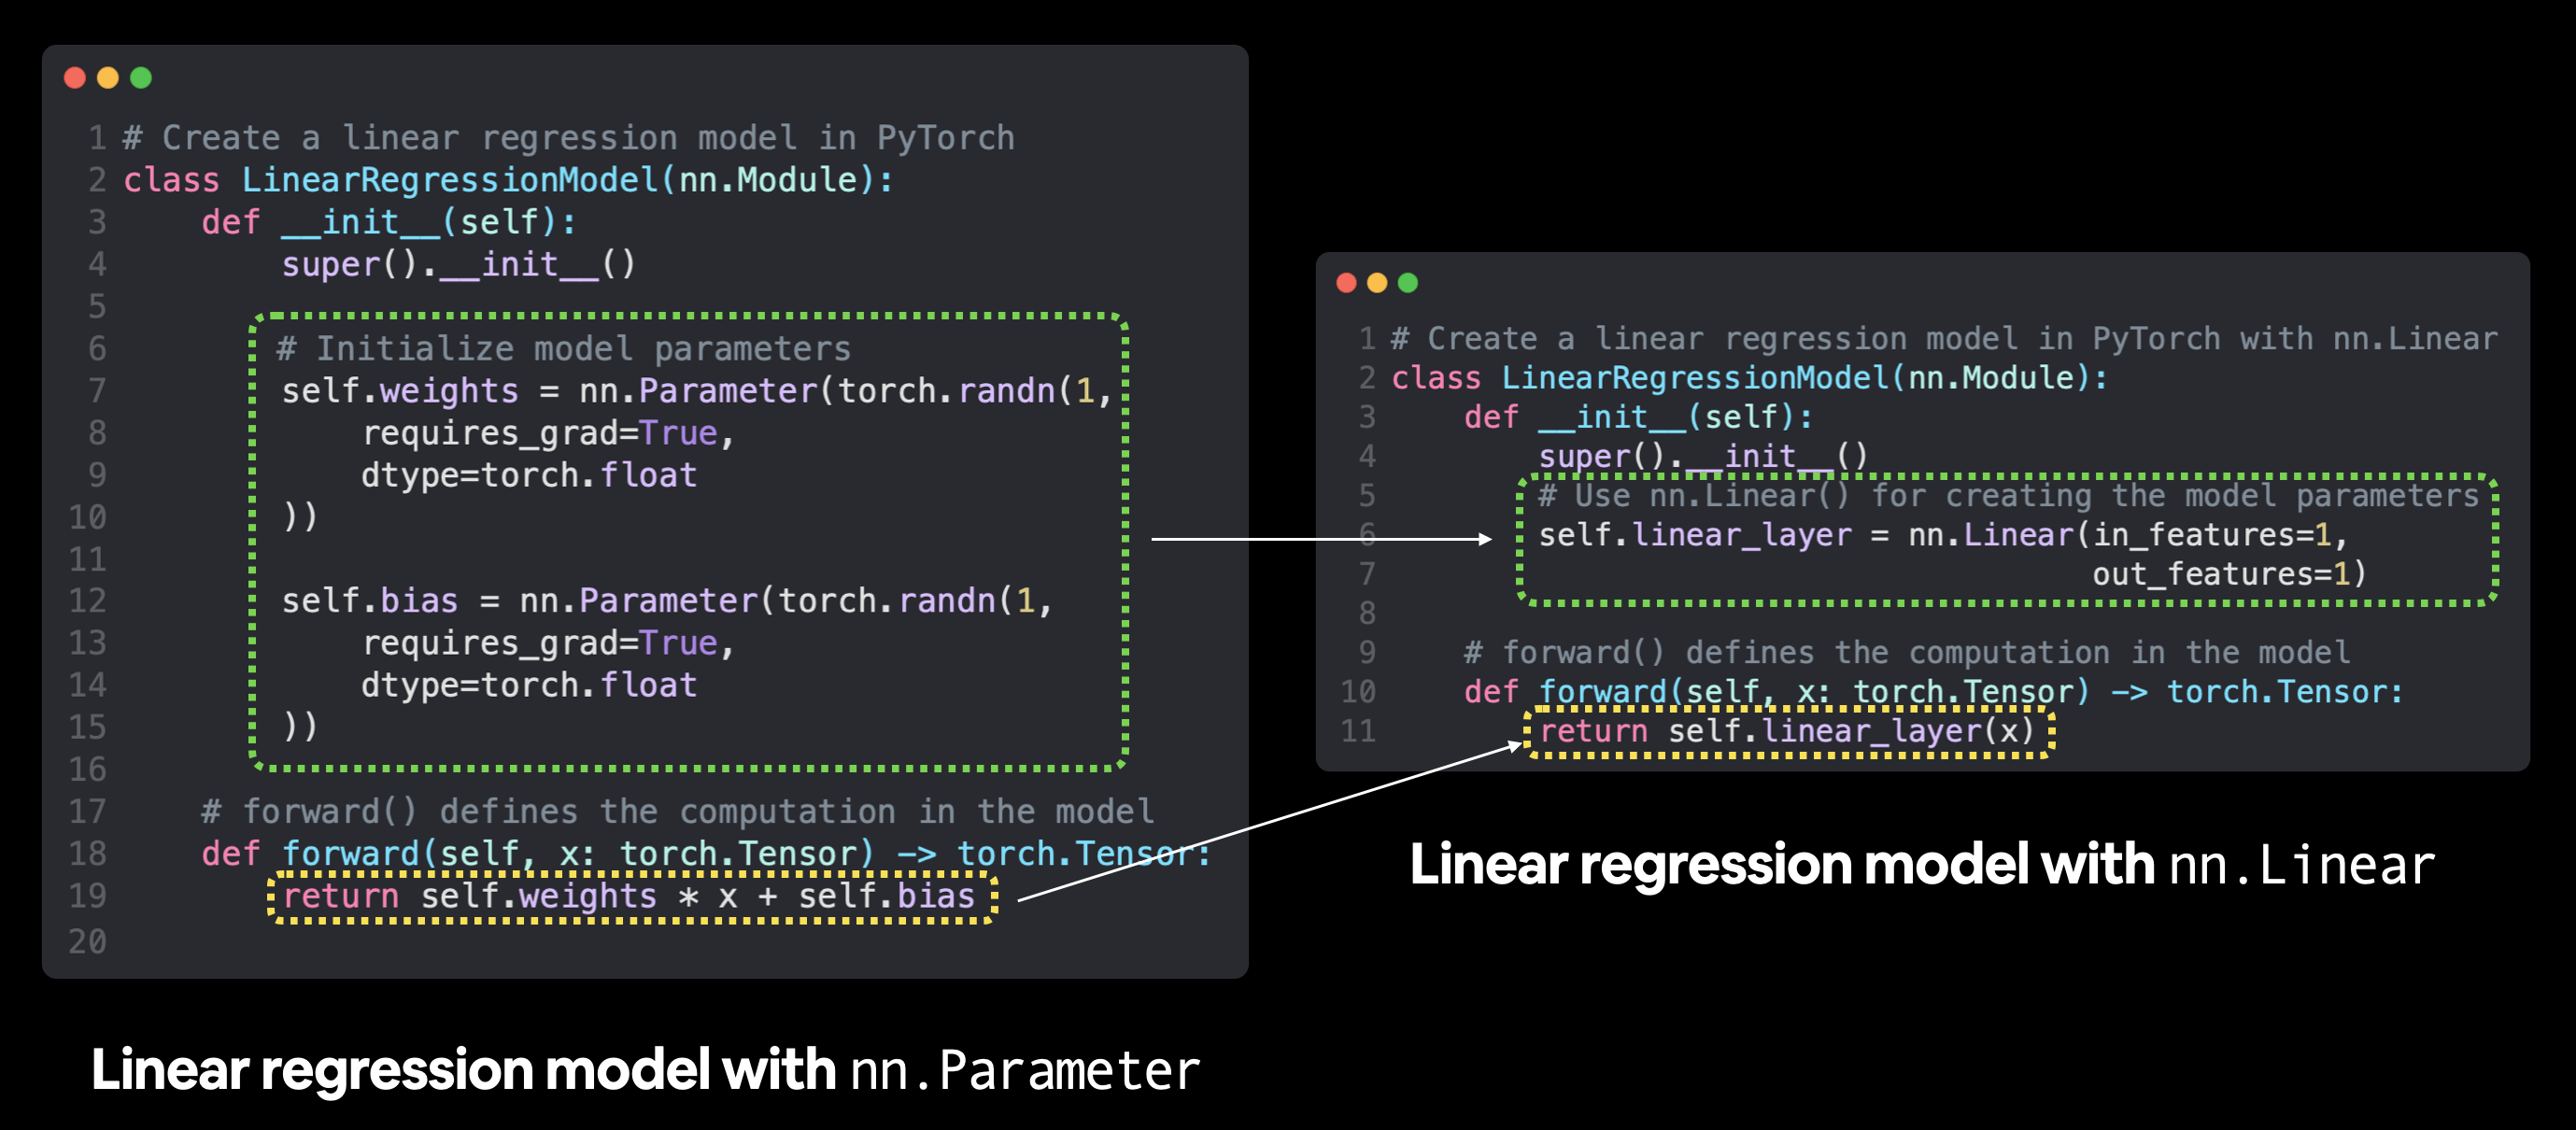 comparison of nn.Parameter Linear Regression model and nn.Linear Linear Regression model